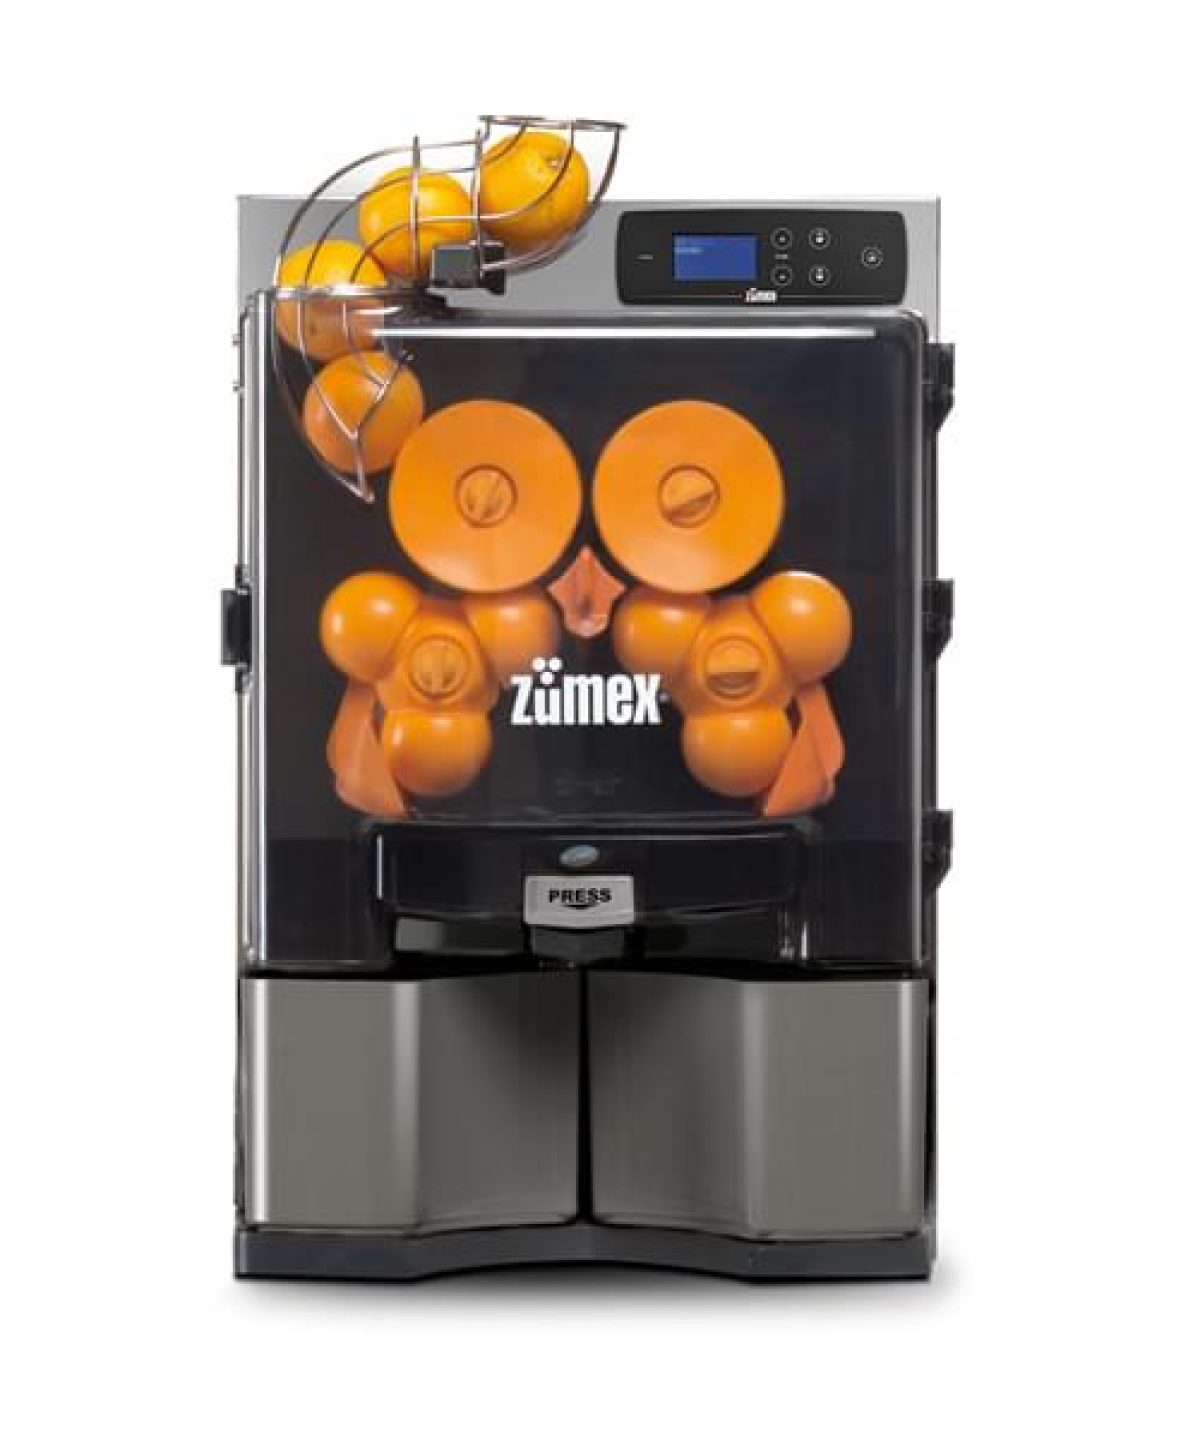 Juice Beverage Making Machine 120W Automatic Feeding Juice Making Machine Grapefruit Orange/ Juice Drink Dispenser Commercial Orange Juicer Machine Juice Maker 